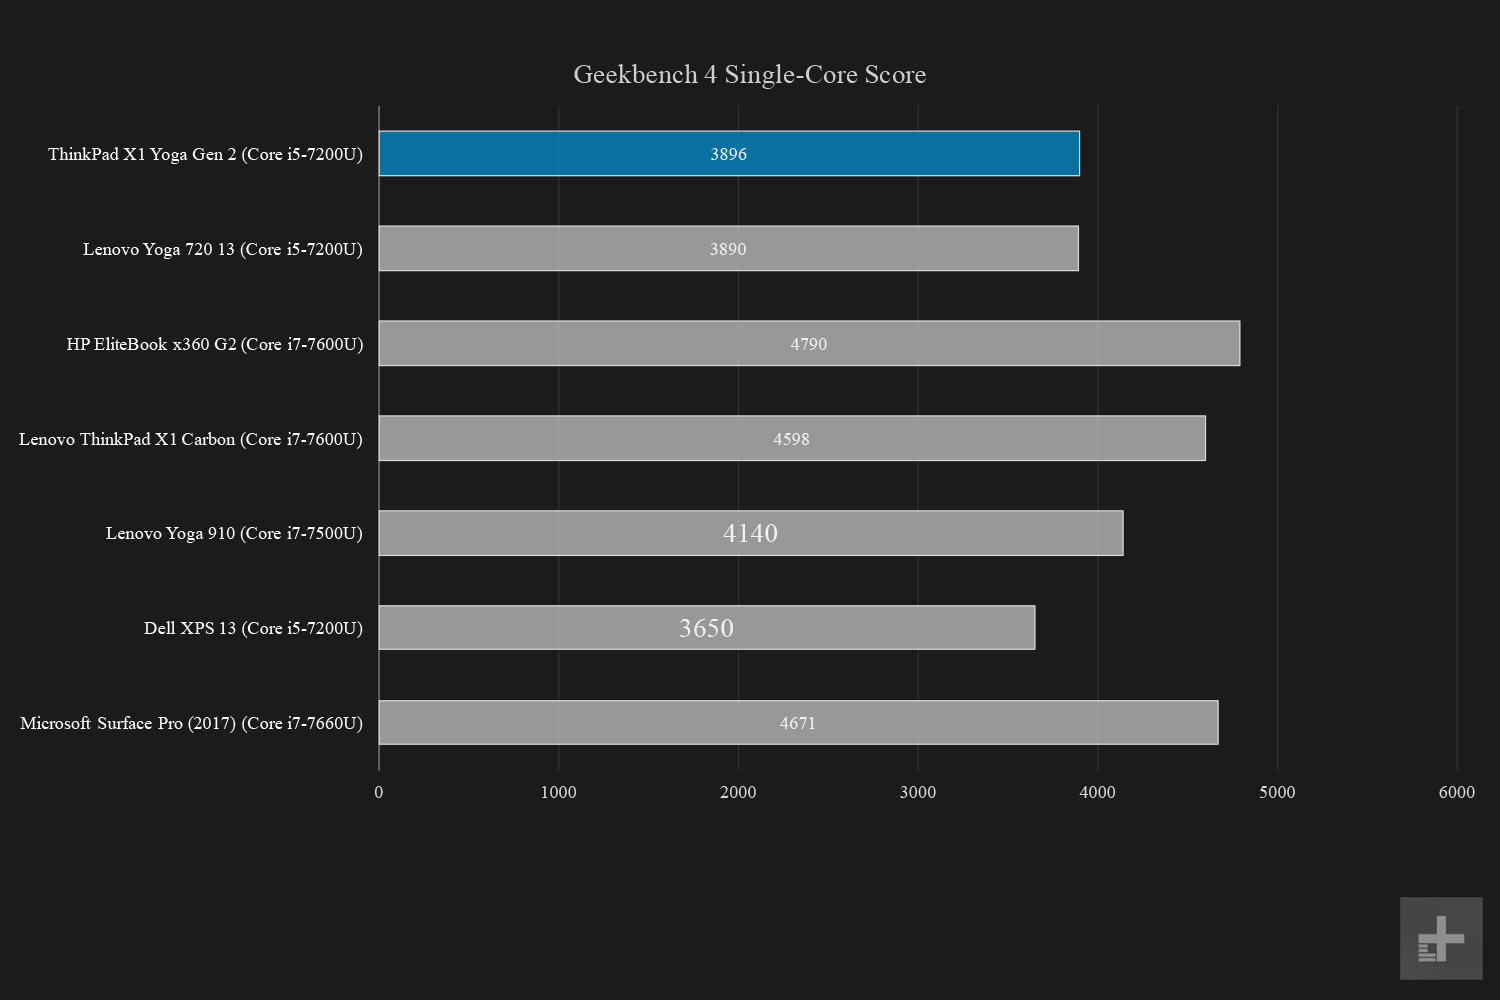 Lenovo Thinkpad X1 Yoga Geekbench single core score